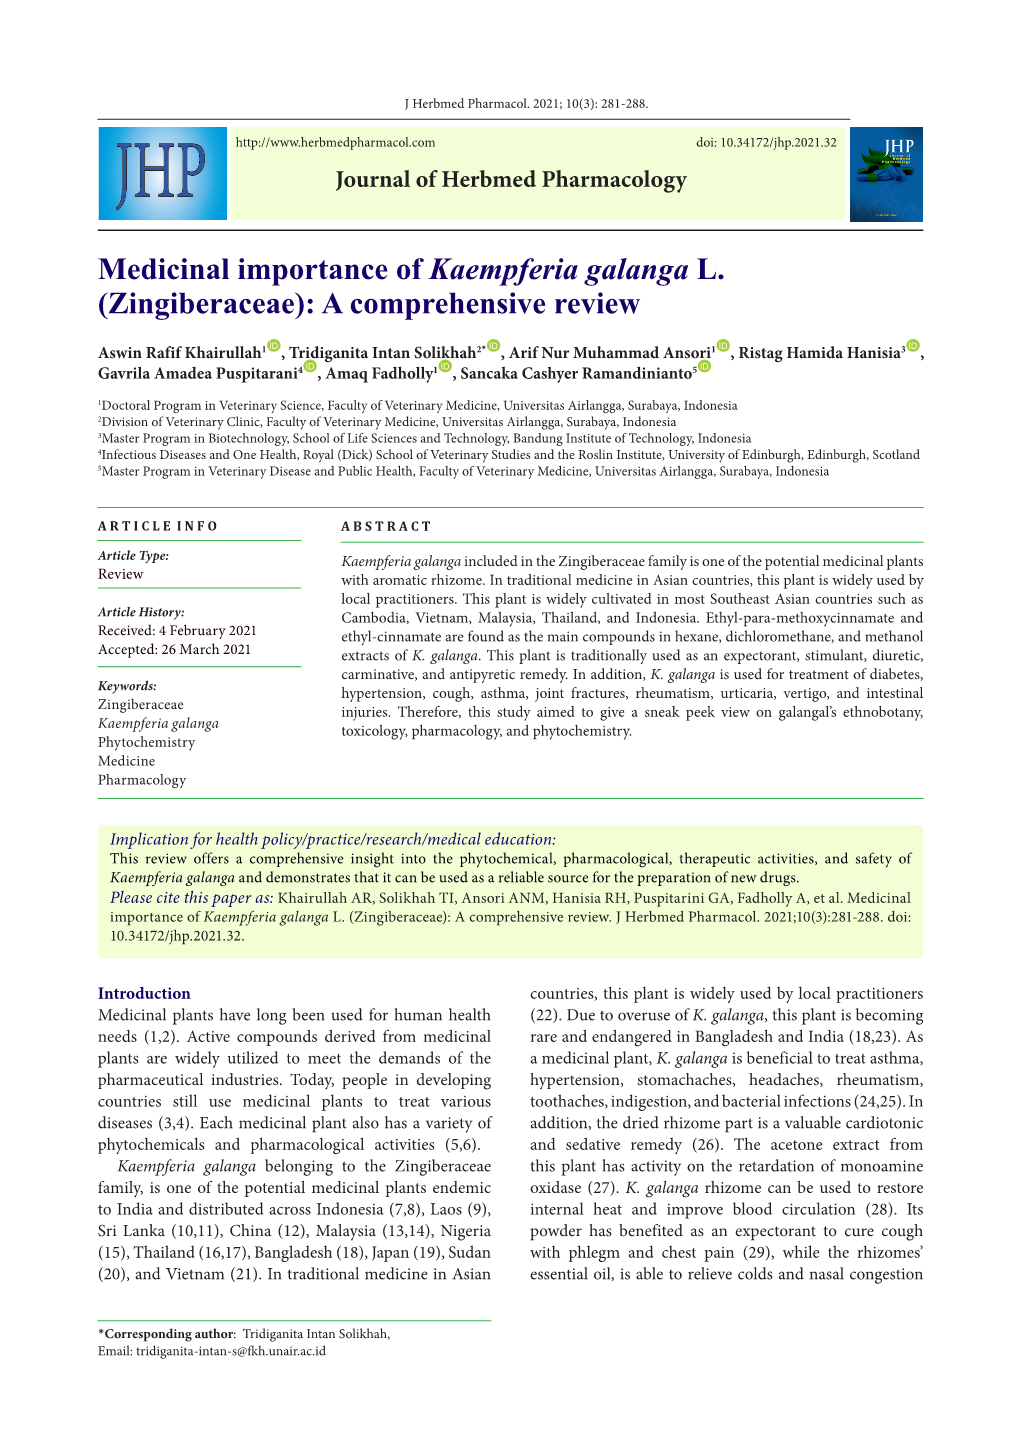 Medicinal Importance of Kaempferia Galanga L. (Zingiberaceae): a Comprehensive Review